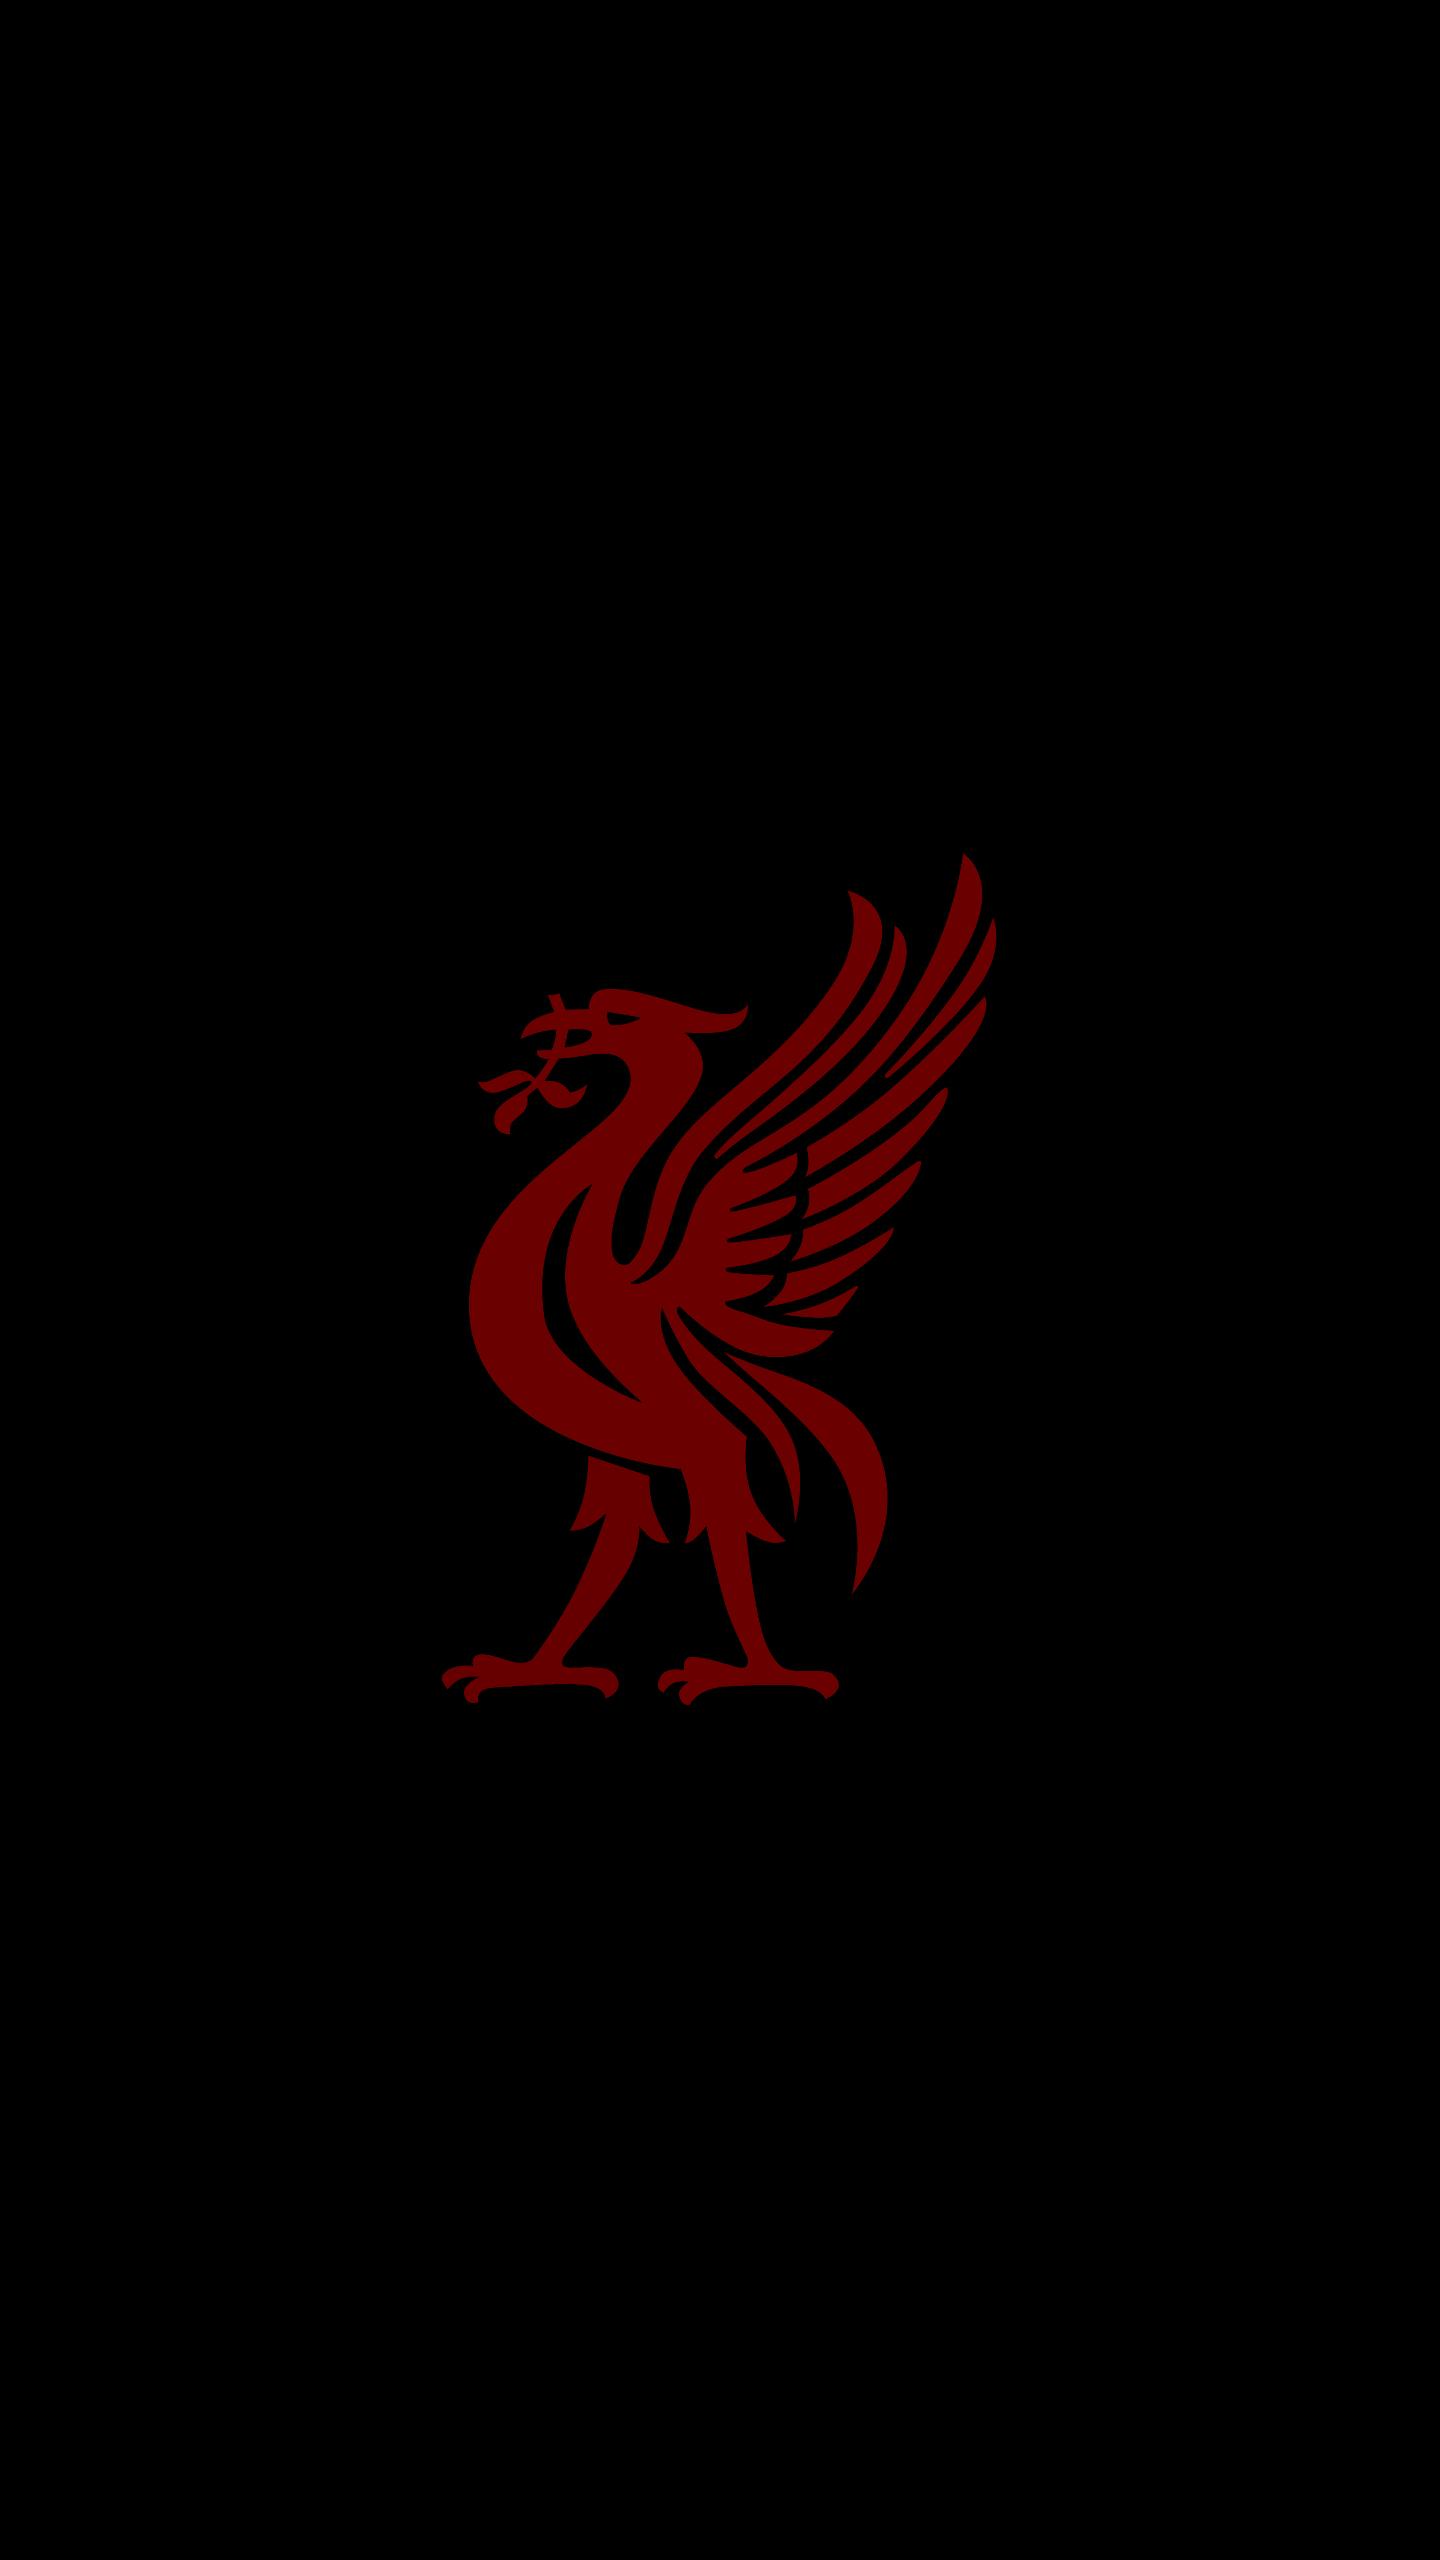 Black Wallpaper Liverpool Logo